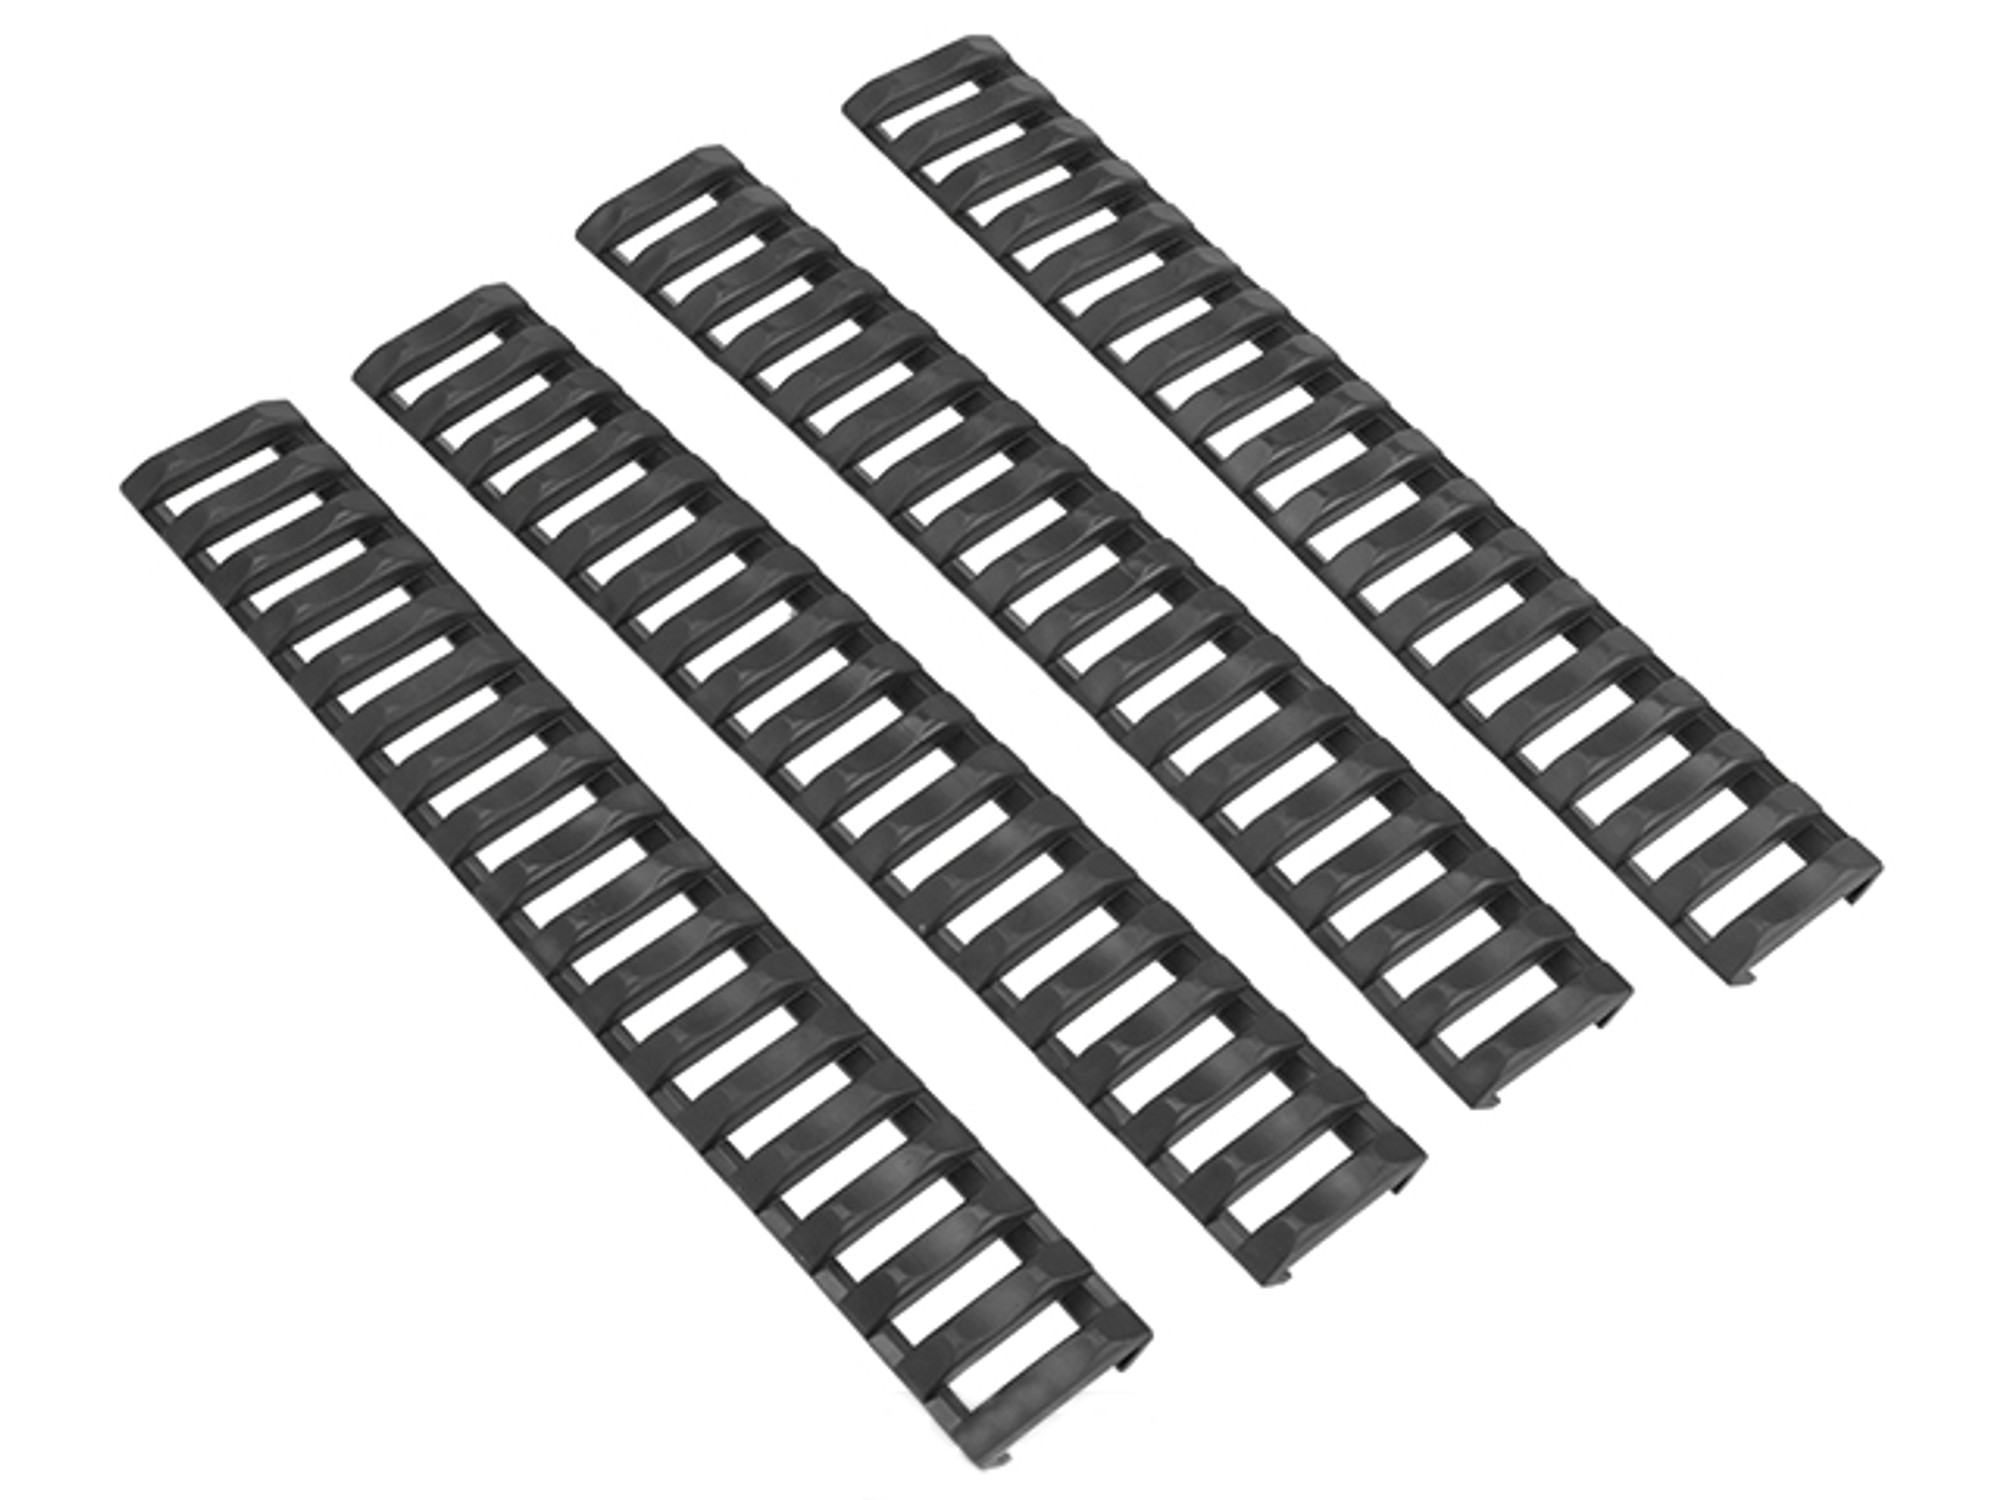 G&P Slim Rubber Hand Guard Ladder Rail Cover - Set of 4 (Black)